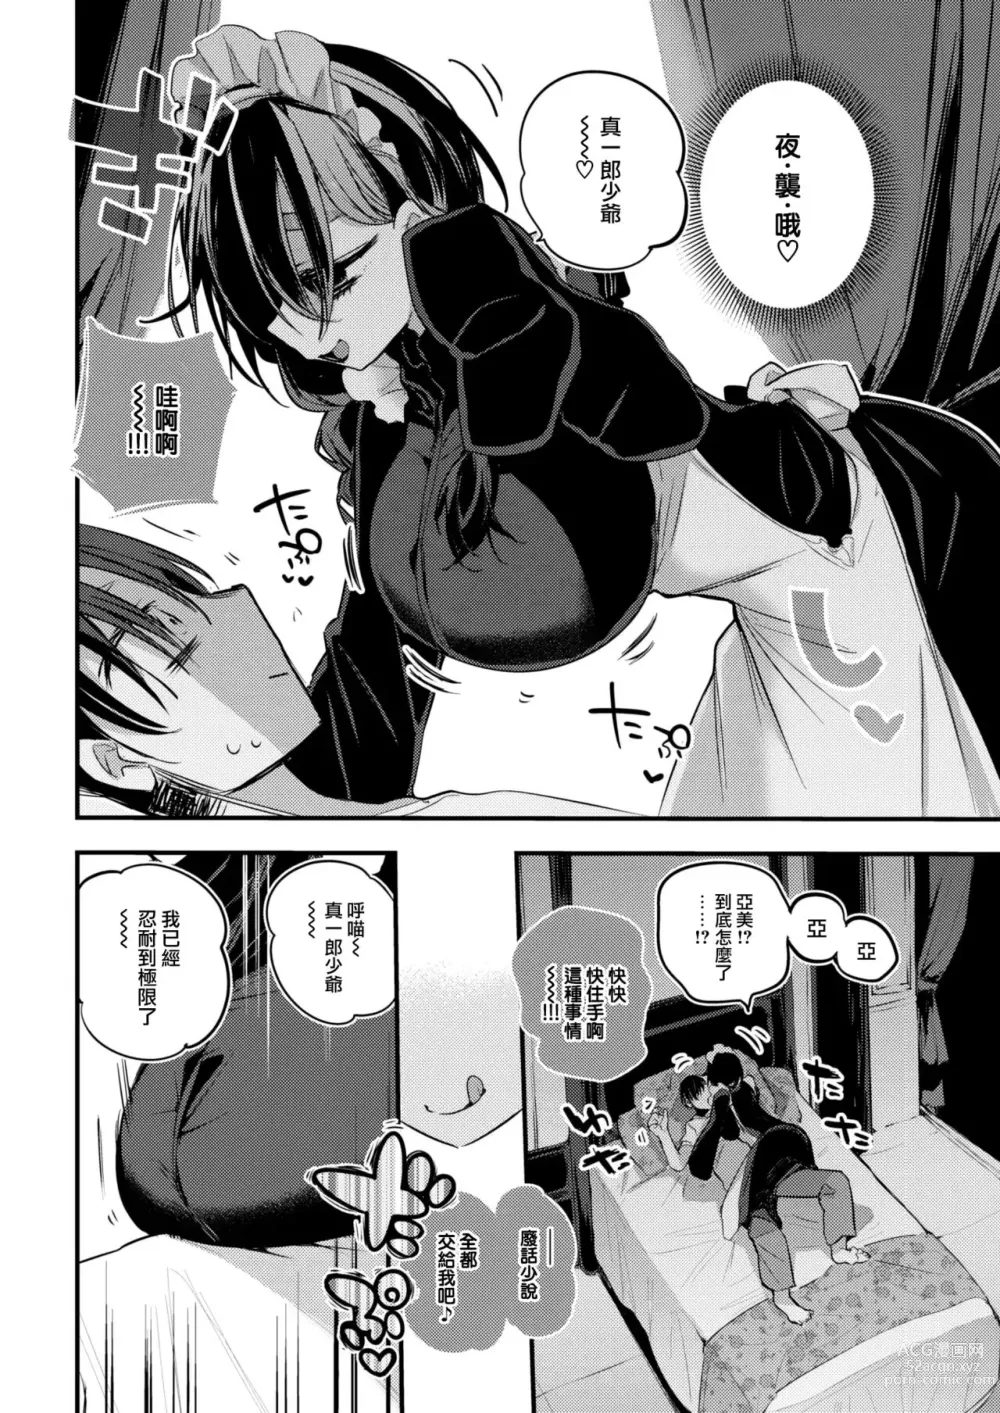 Page 7 of manga Akumade Maid desukara!